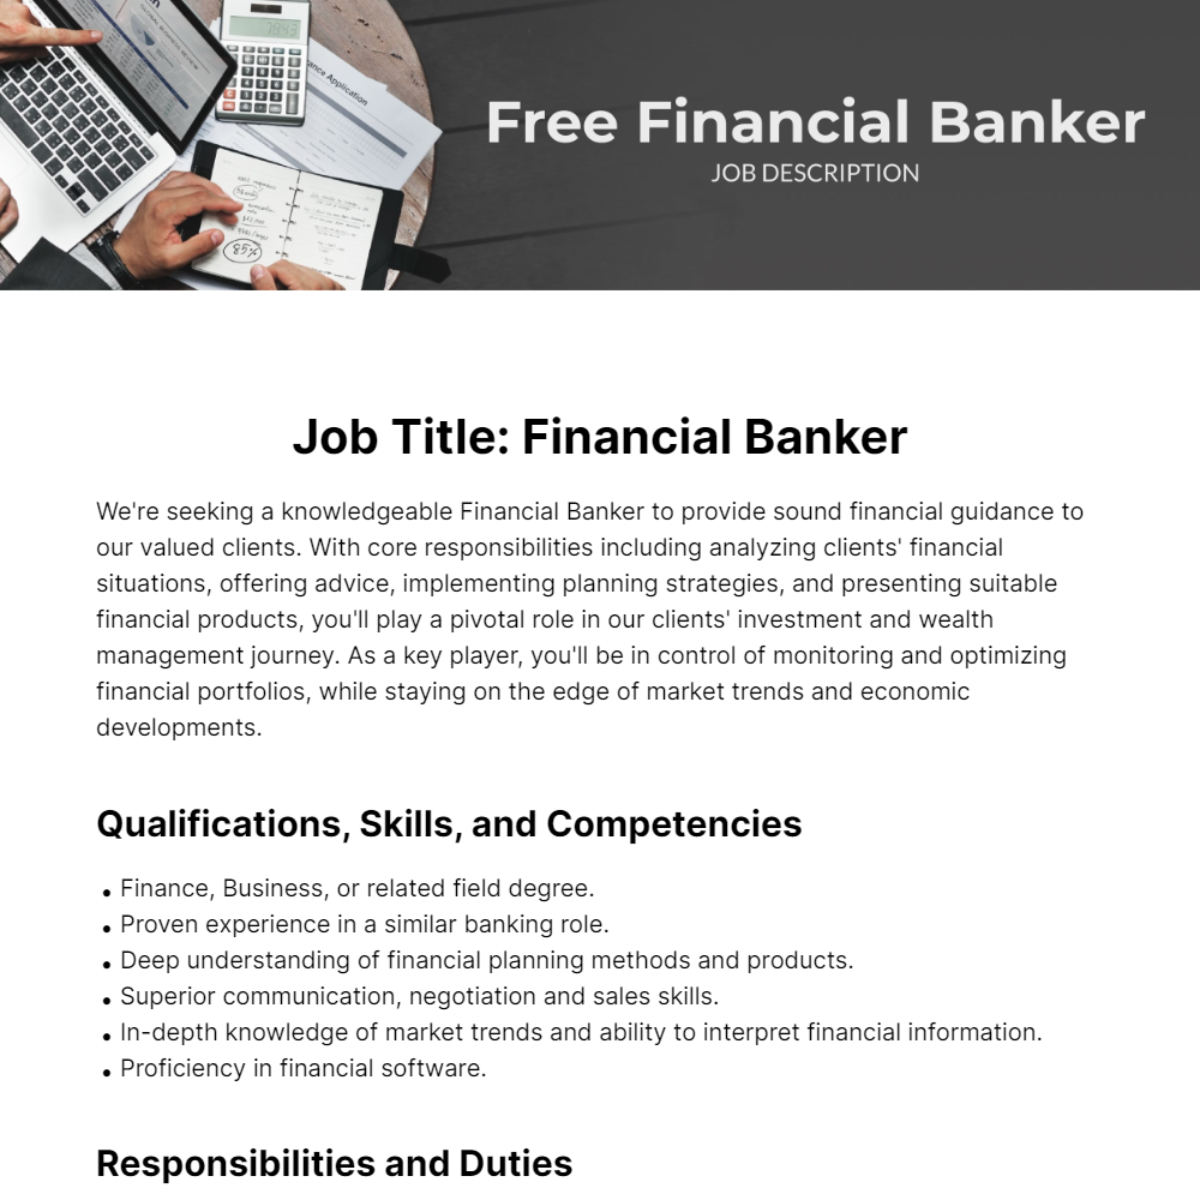 Free Financial Banker Job Description Template